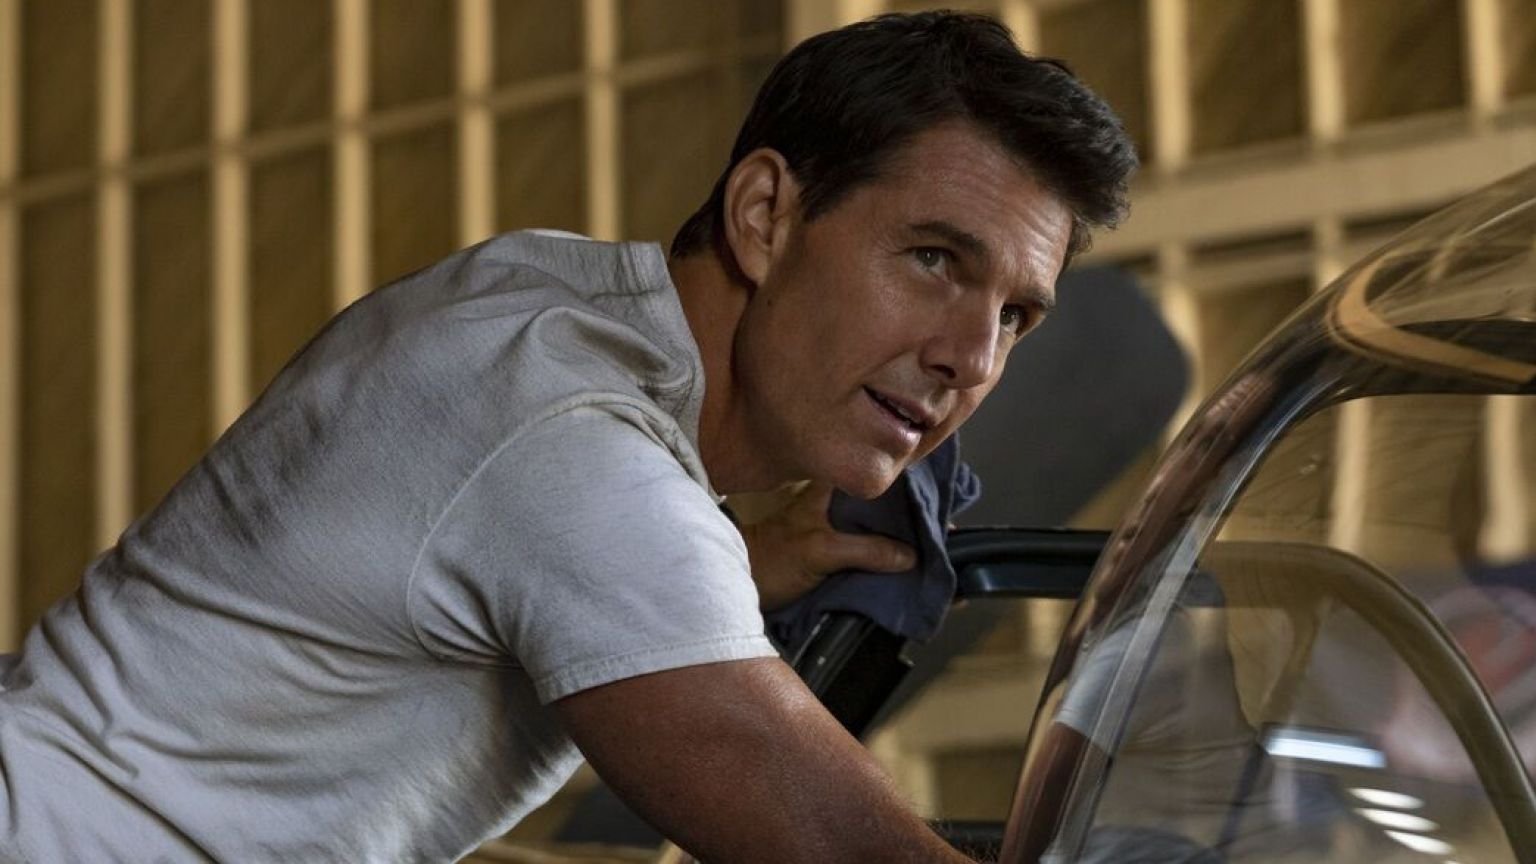 Paramount husselt releasedata: 'Mission: Impossible' en 'Top Gun: Maverick' uitgesteld, 'Snake Eyes' vervroegd